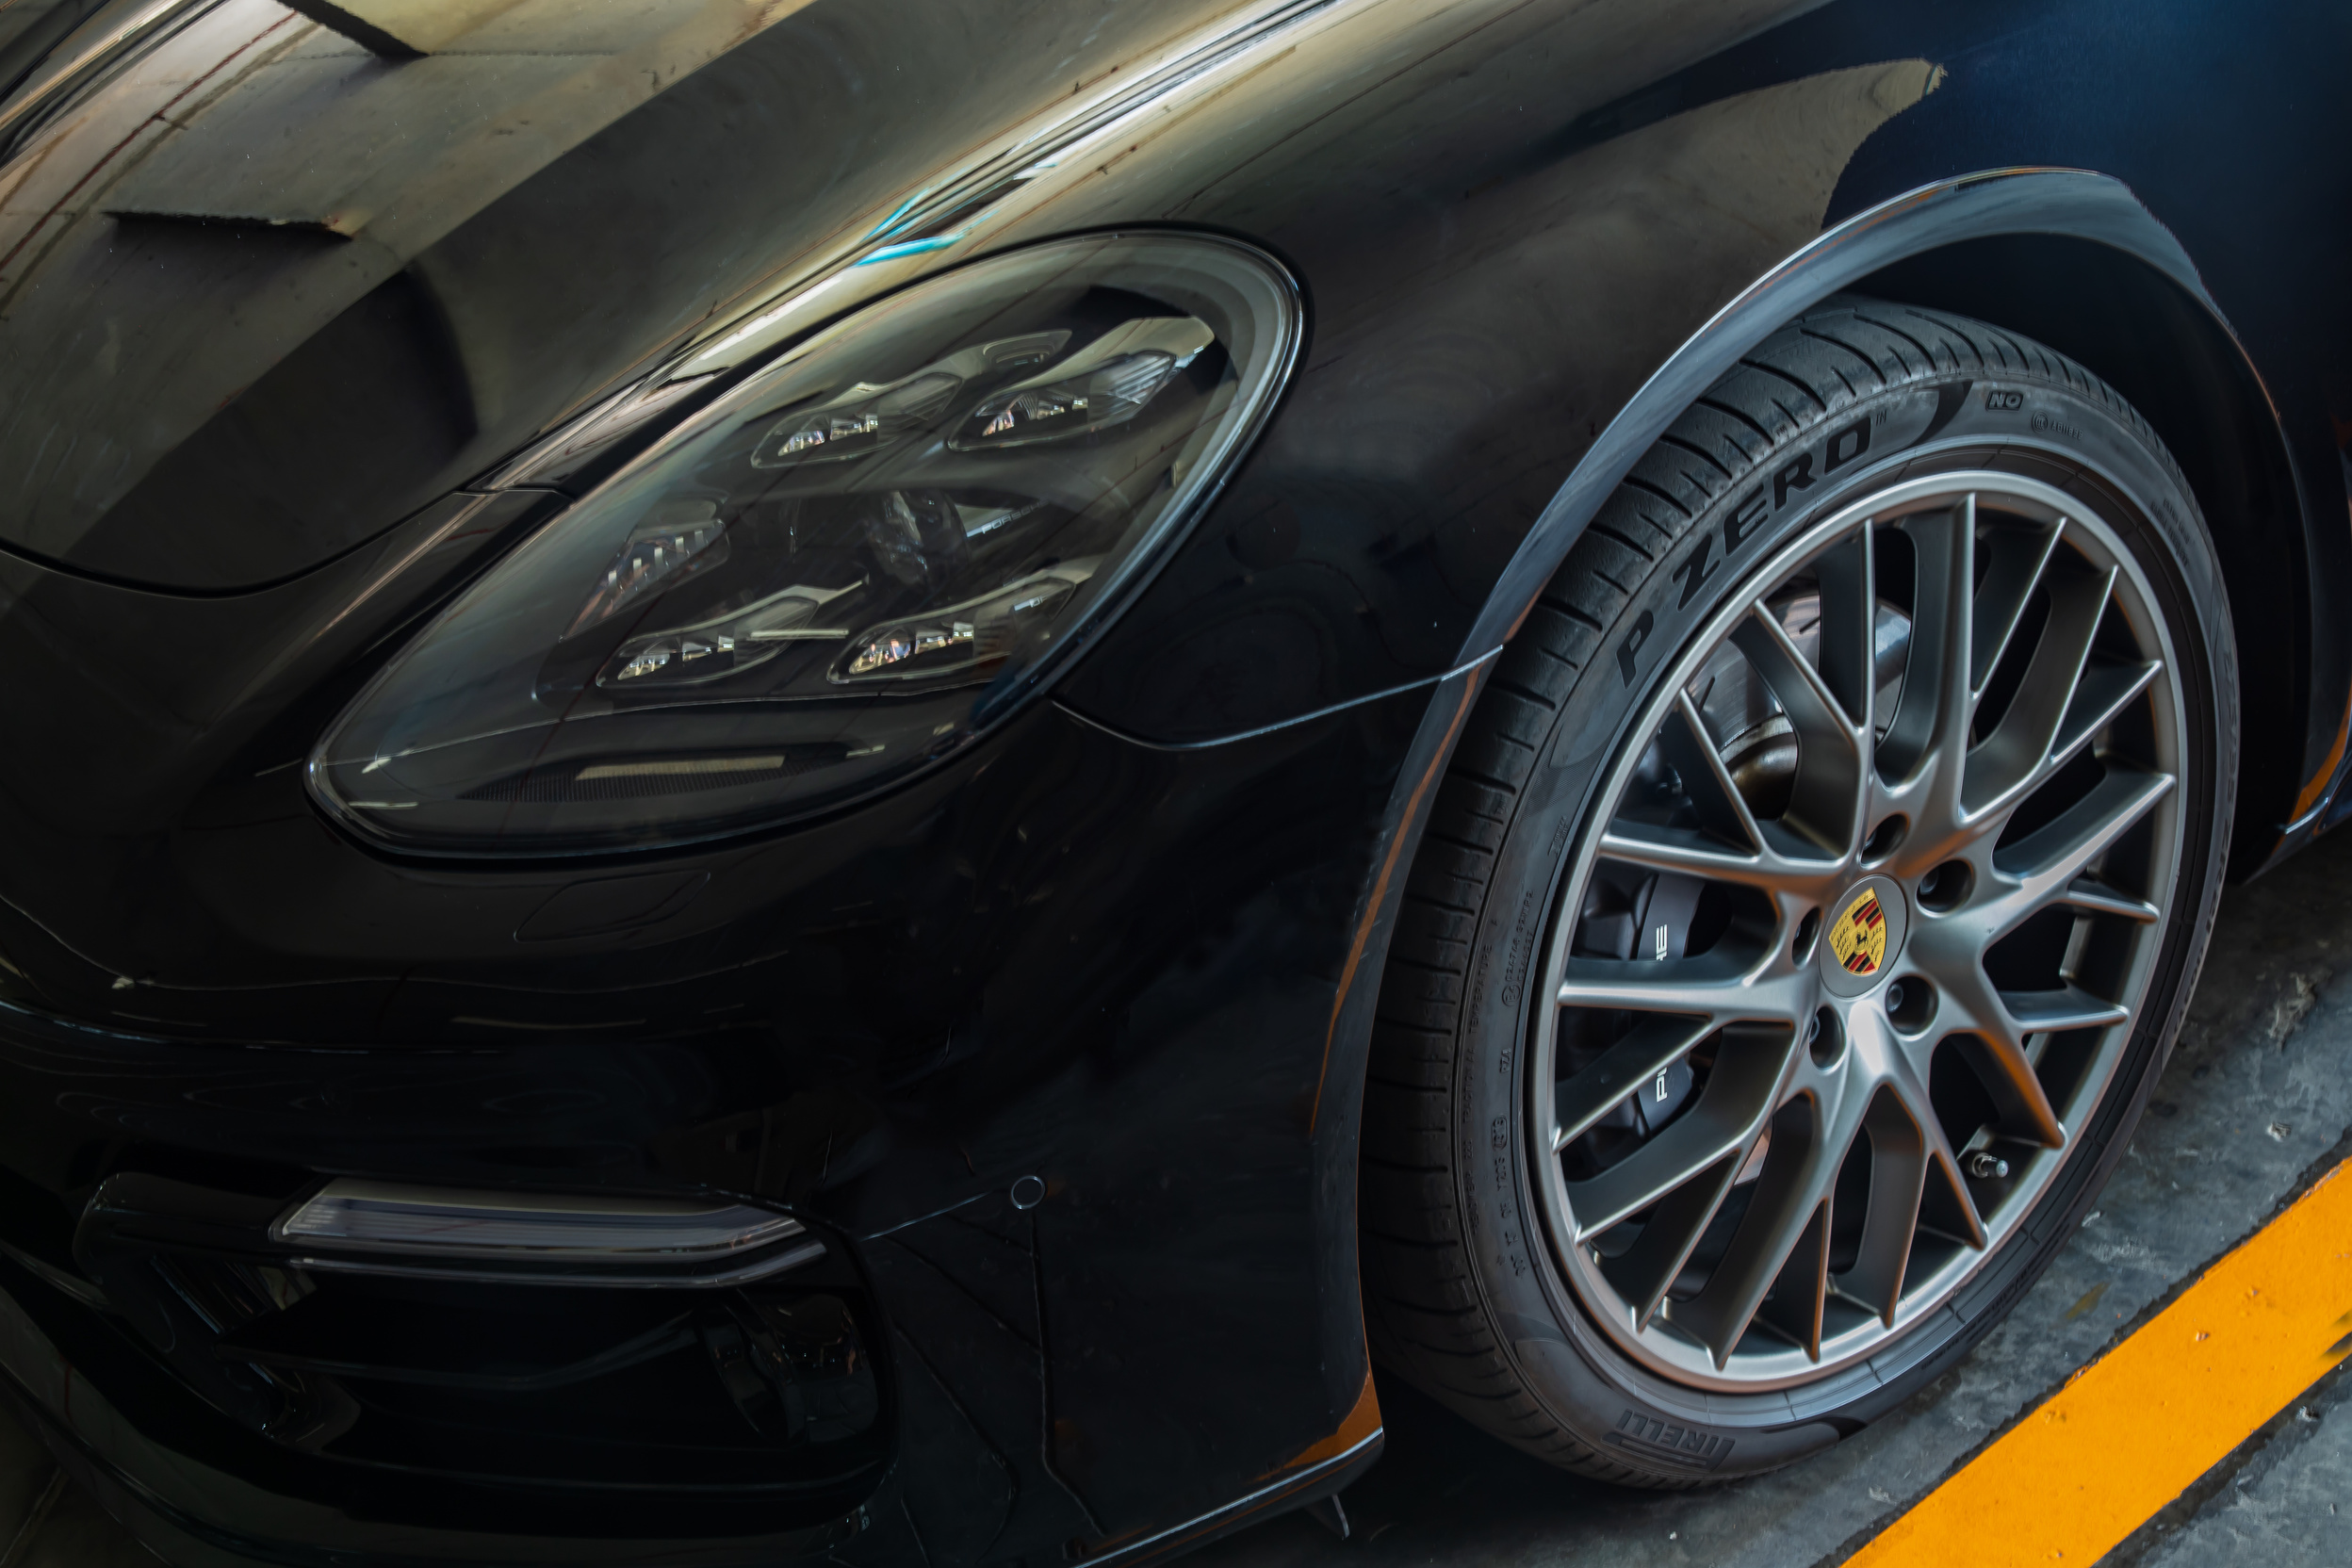 Close-up of Headlights, Wheel, and Rim of Black Porsche Sports C